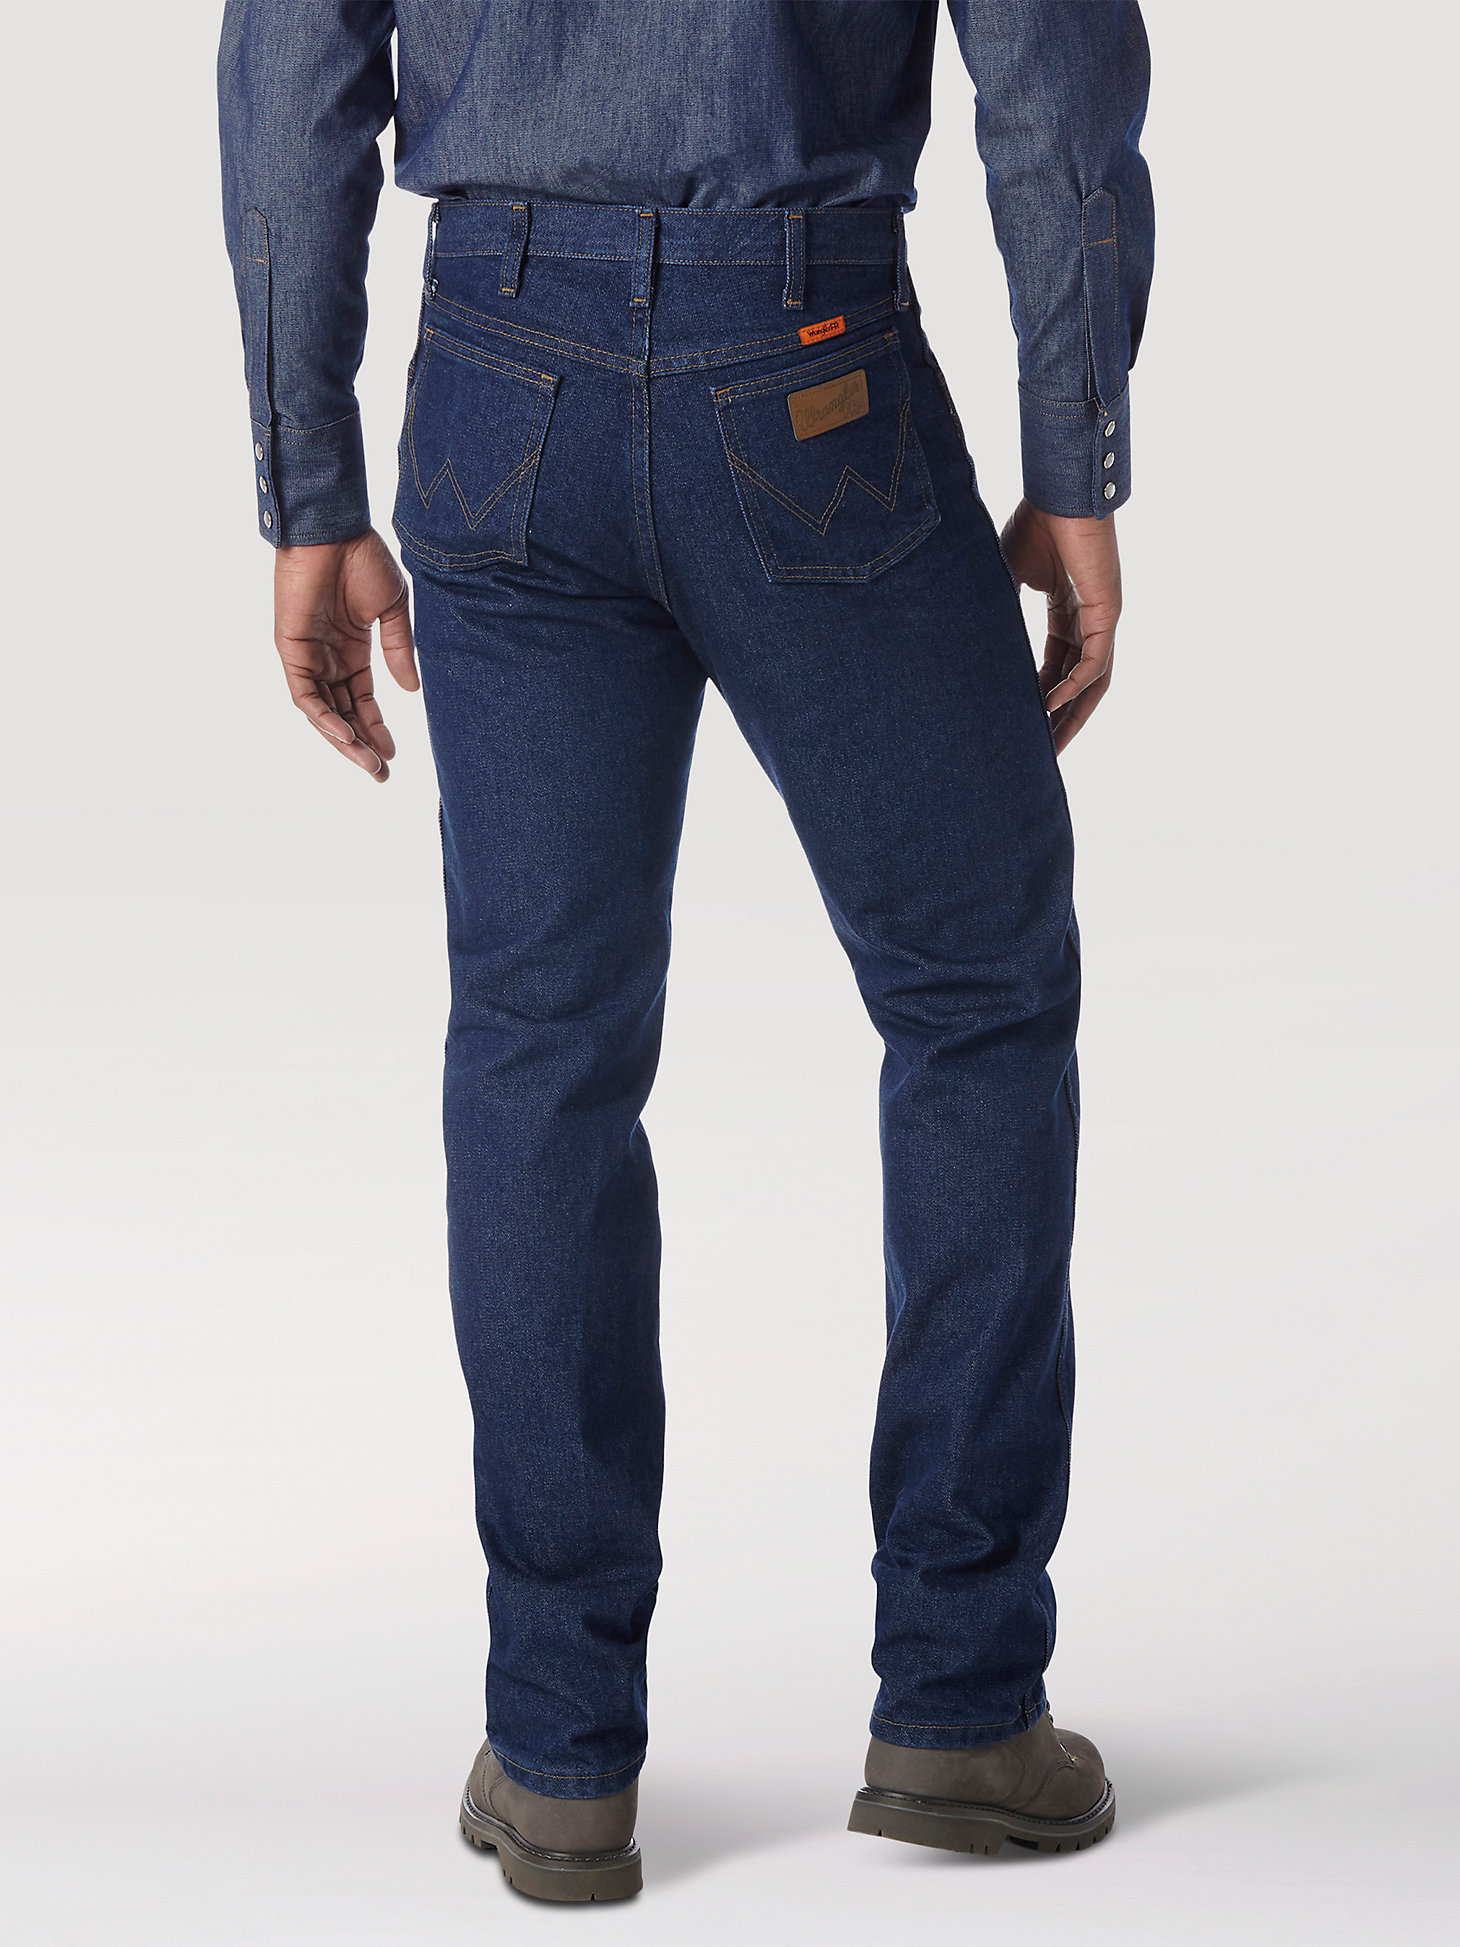 Wrangler® FR Flame Resistant Original Fit Jean in PREWASH alternative view 2